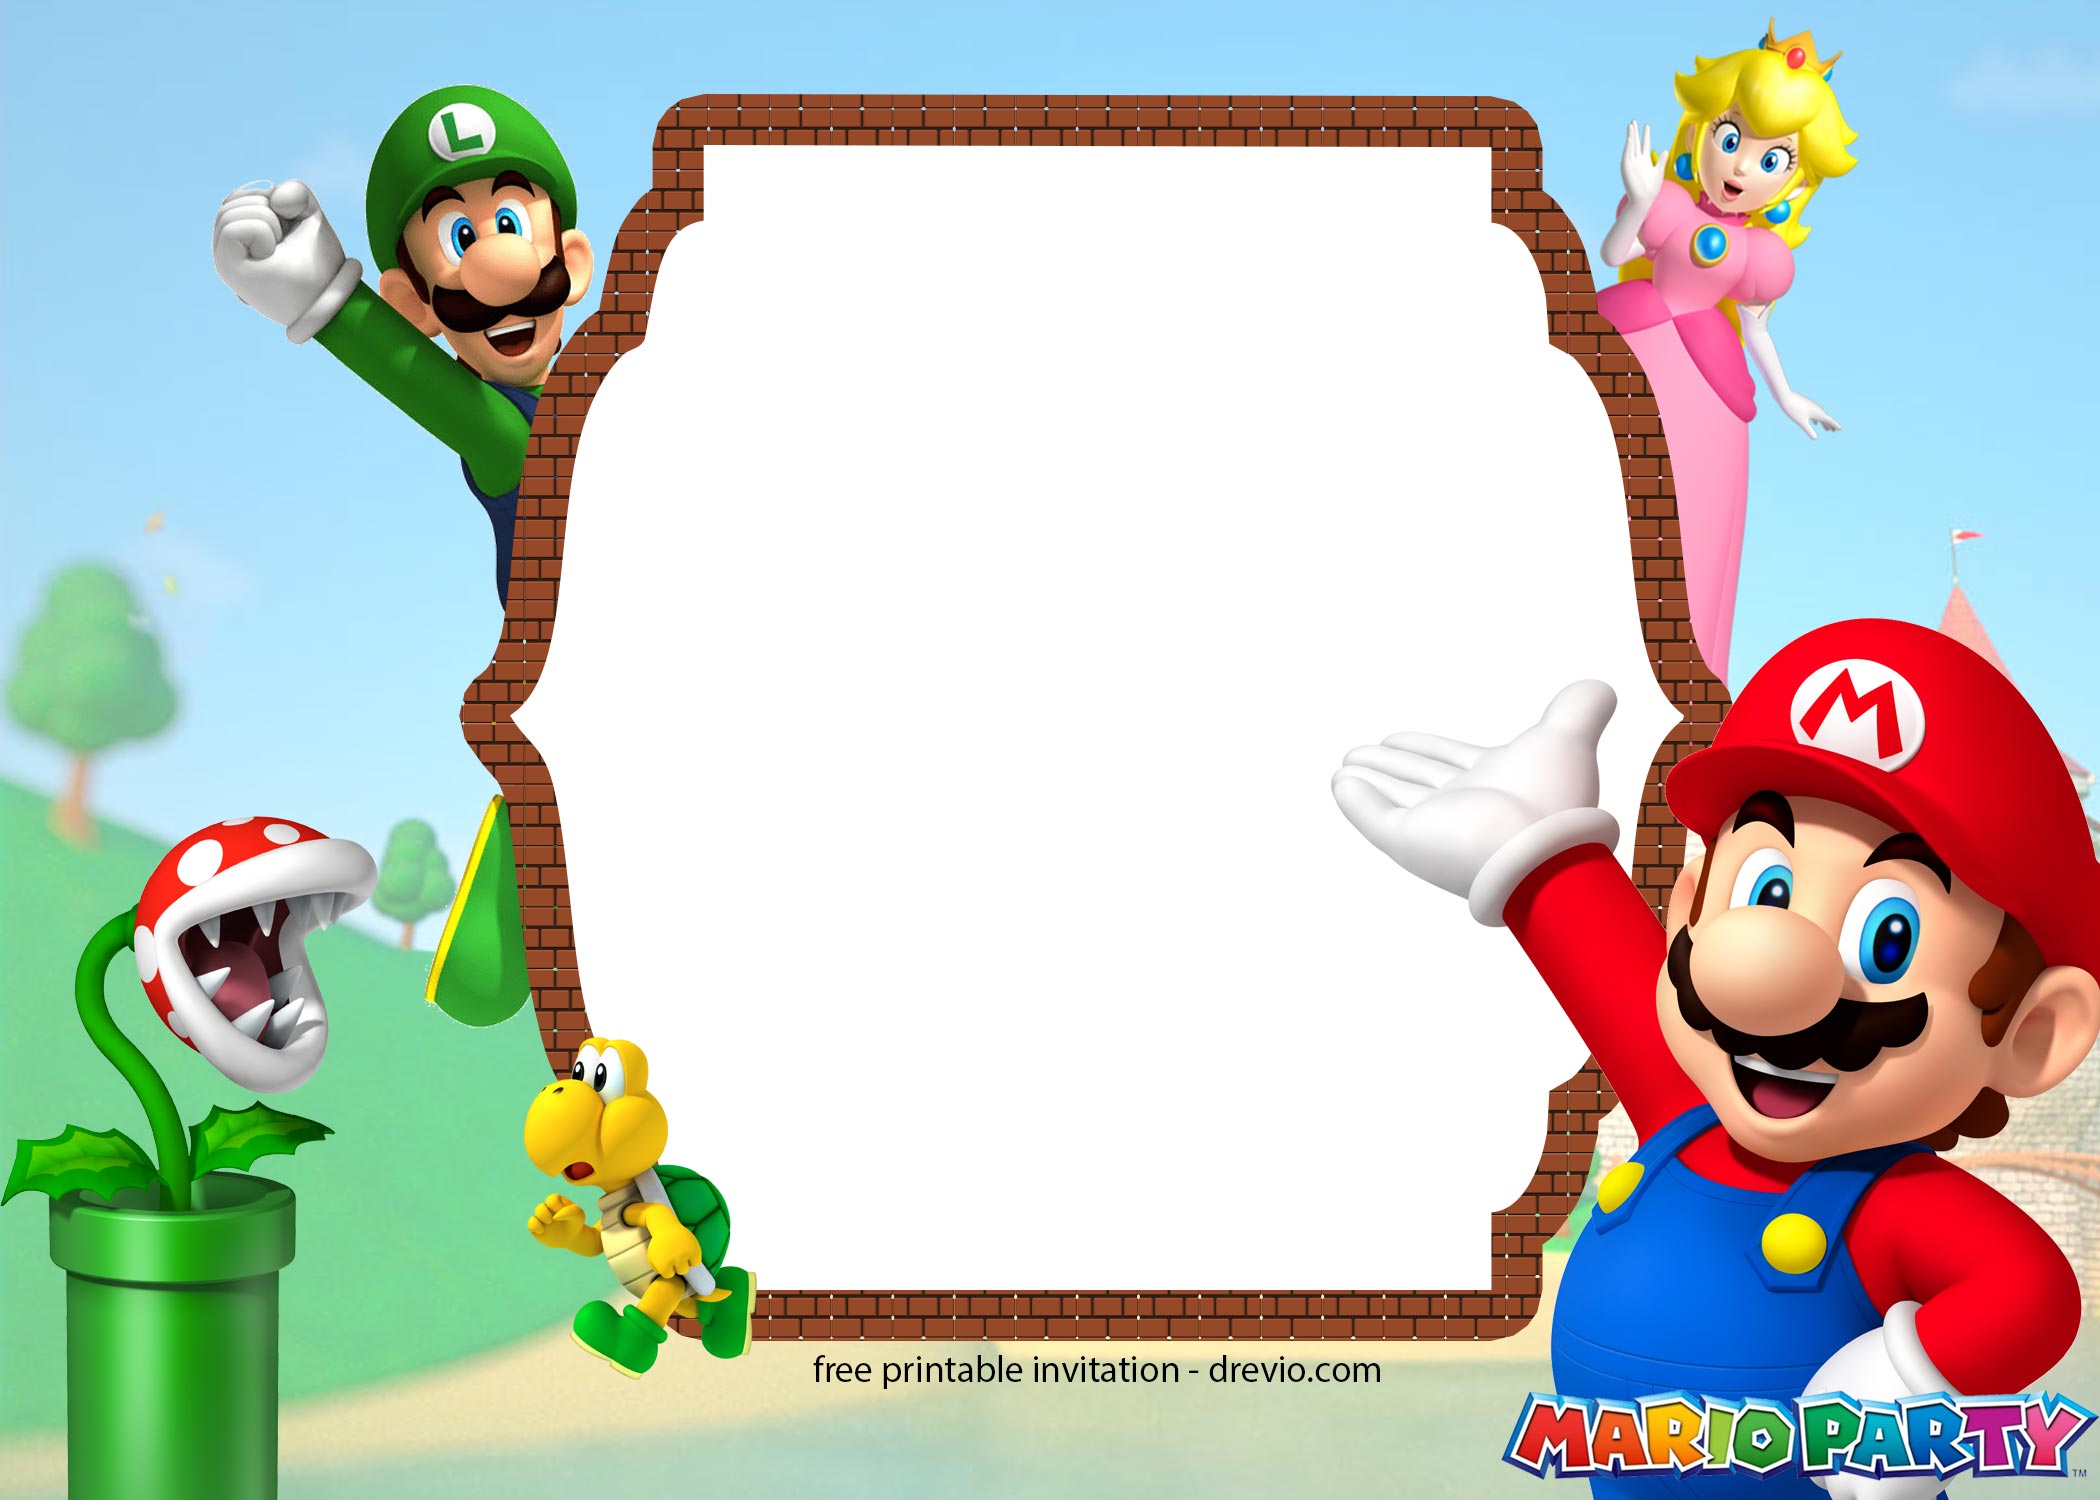 FREE Printable Super Mario Party Birthday Invitation Templates DREVIO